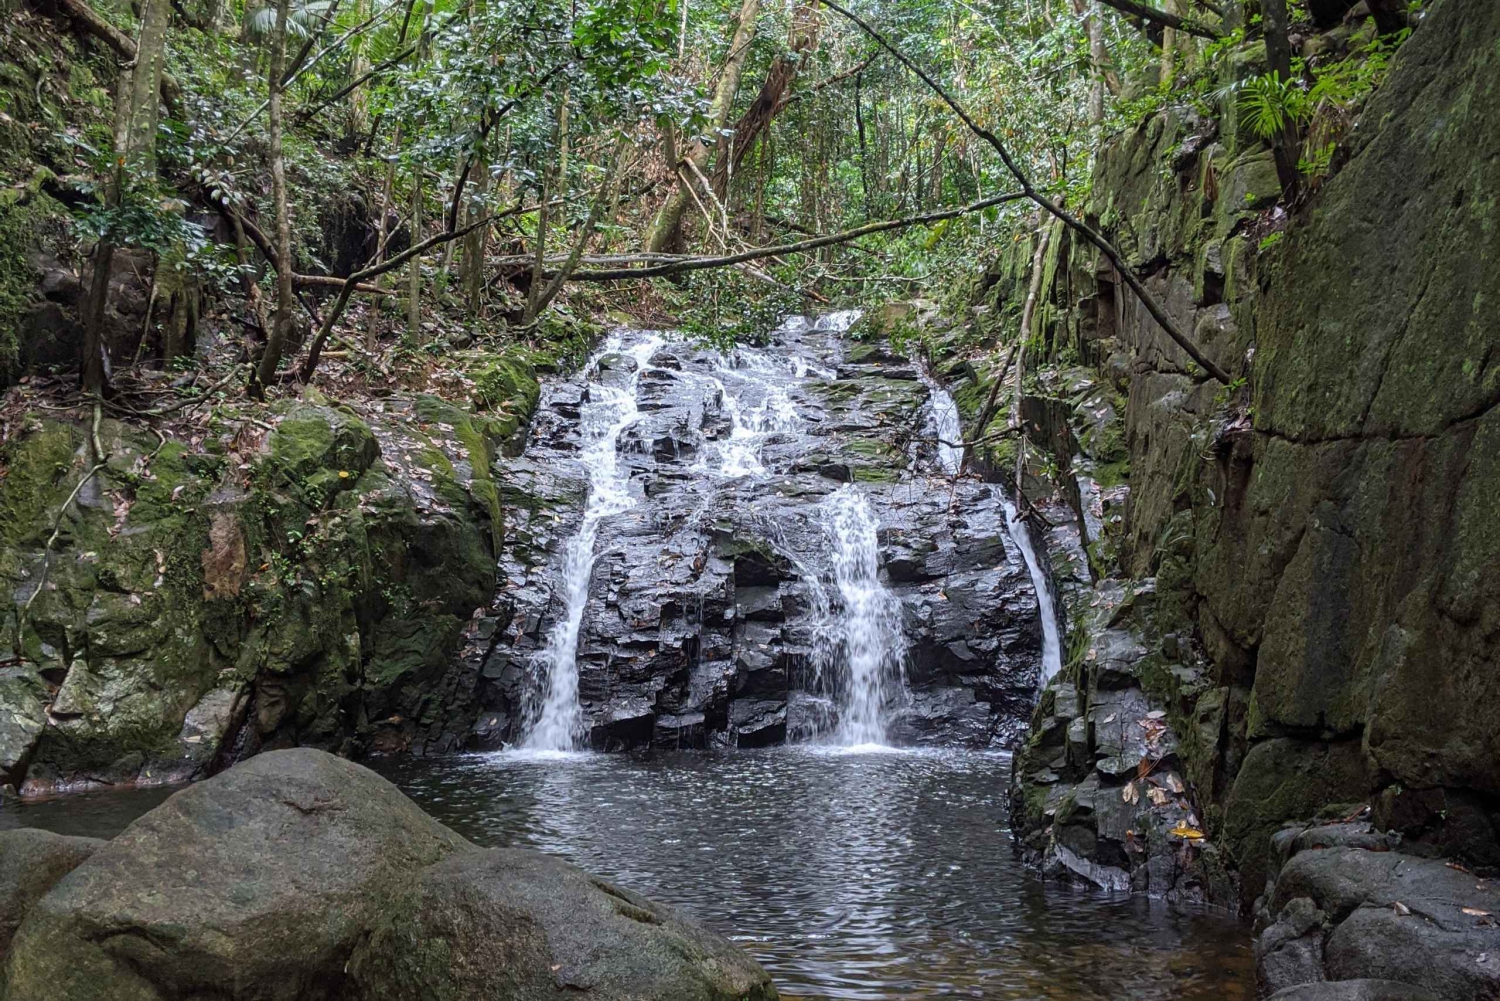 Dschungel-Abenteuer-Wanderung: Klettern, Wasserfall, Seychellen entdecken!